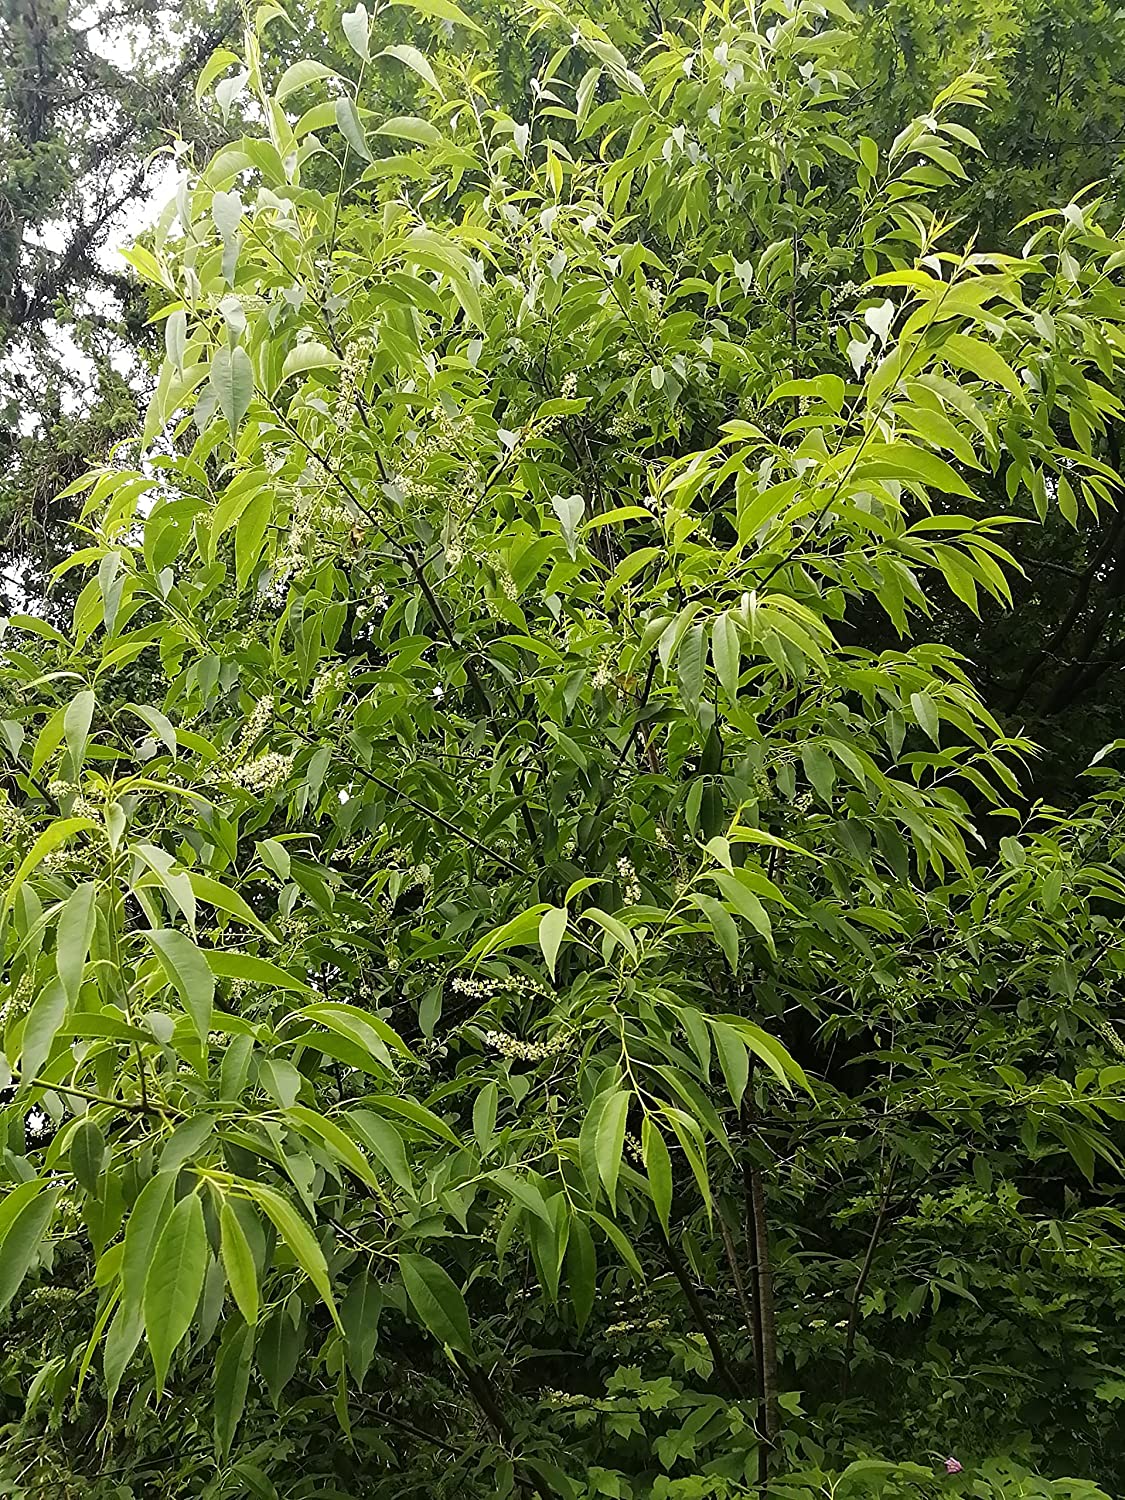 Hundredfold Black Cherry Tree 10 Seeds - Prunus serotina Canada Native Wild Black Cherry Rum Cherry, Producing Nice Fall Colors & Valuable Wood